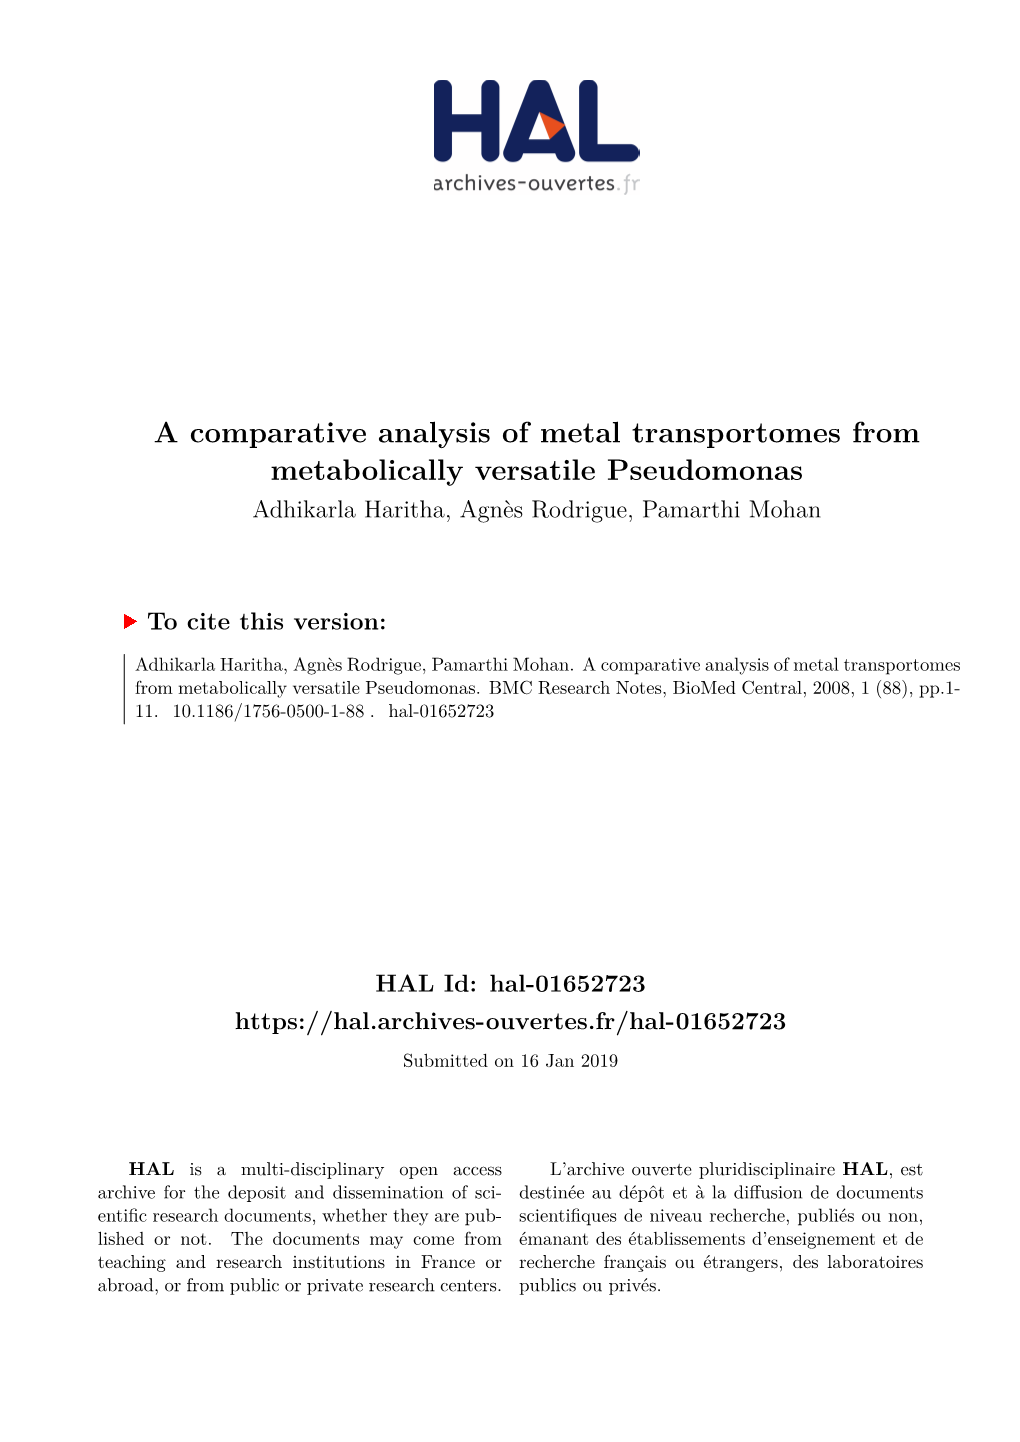 A Comparative Analysis of Metal Transportomes from Metabolically Versatile Pseudomonas Adhikarla Haritha, Agnès Rodrigue, Pamarthi Mohan